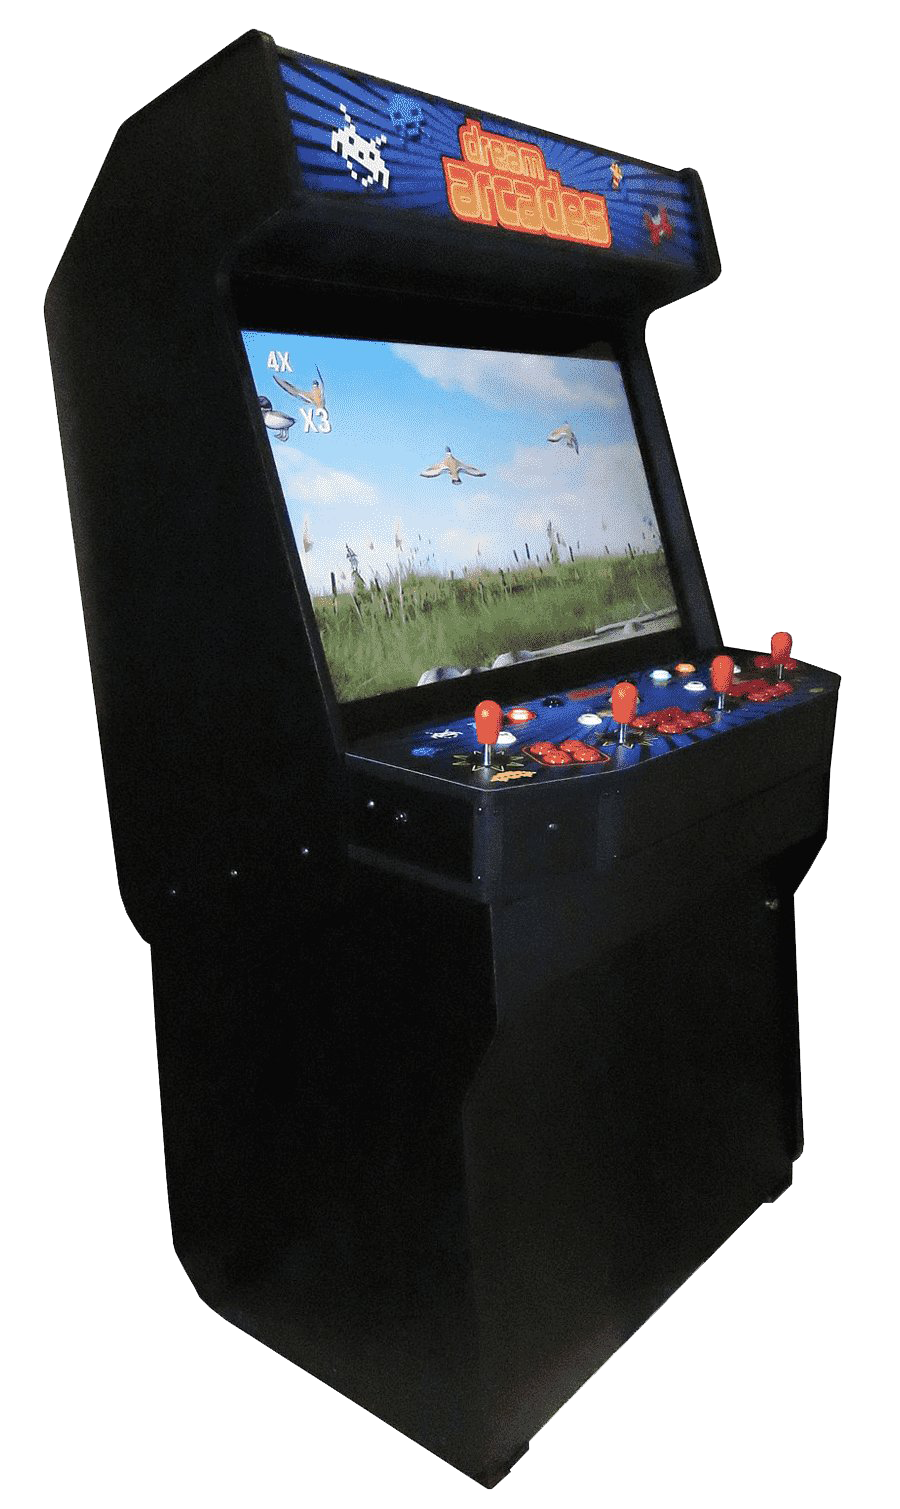 Download PNG image - Retro Arcade Machine Download PNG Image 